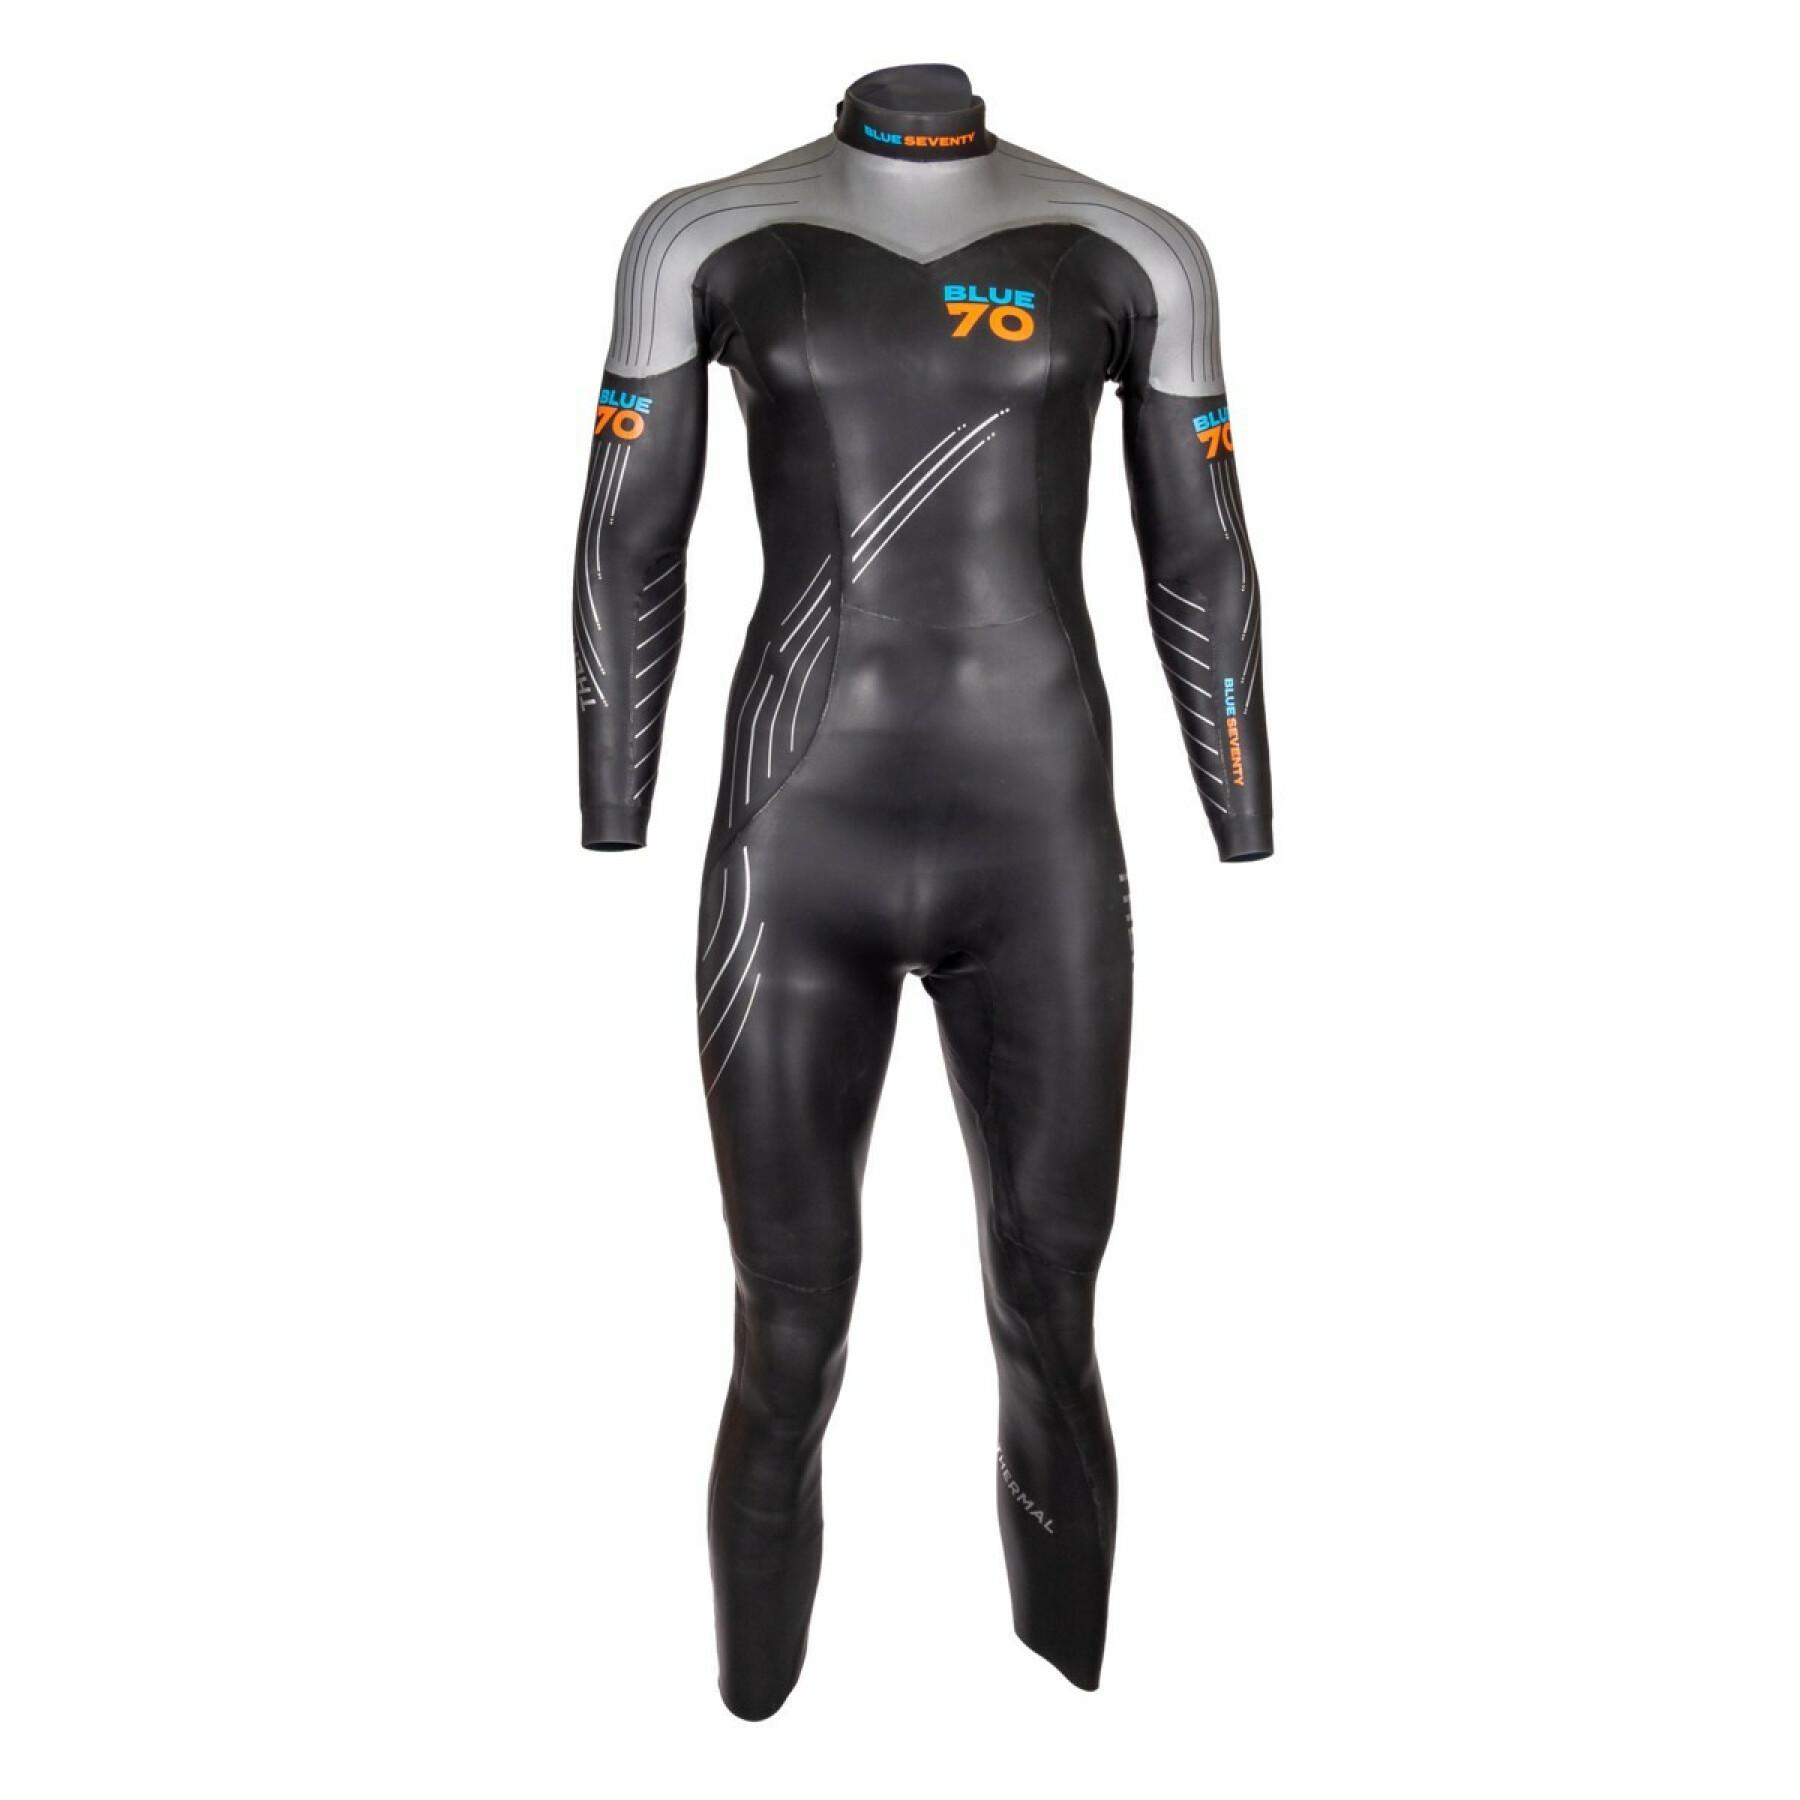 Triathlon suit Blue Seventy Reaction Thermal